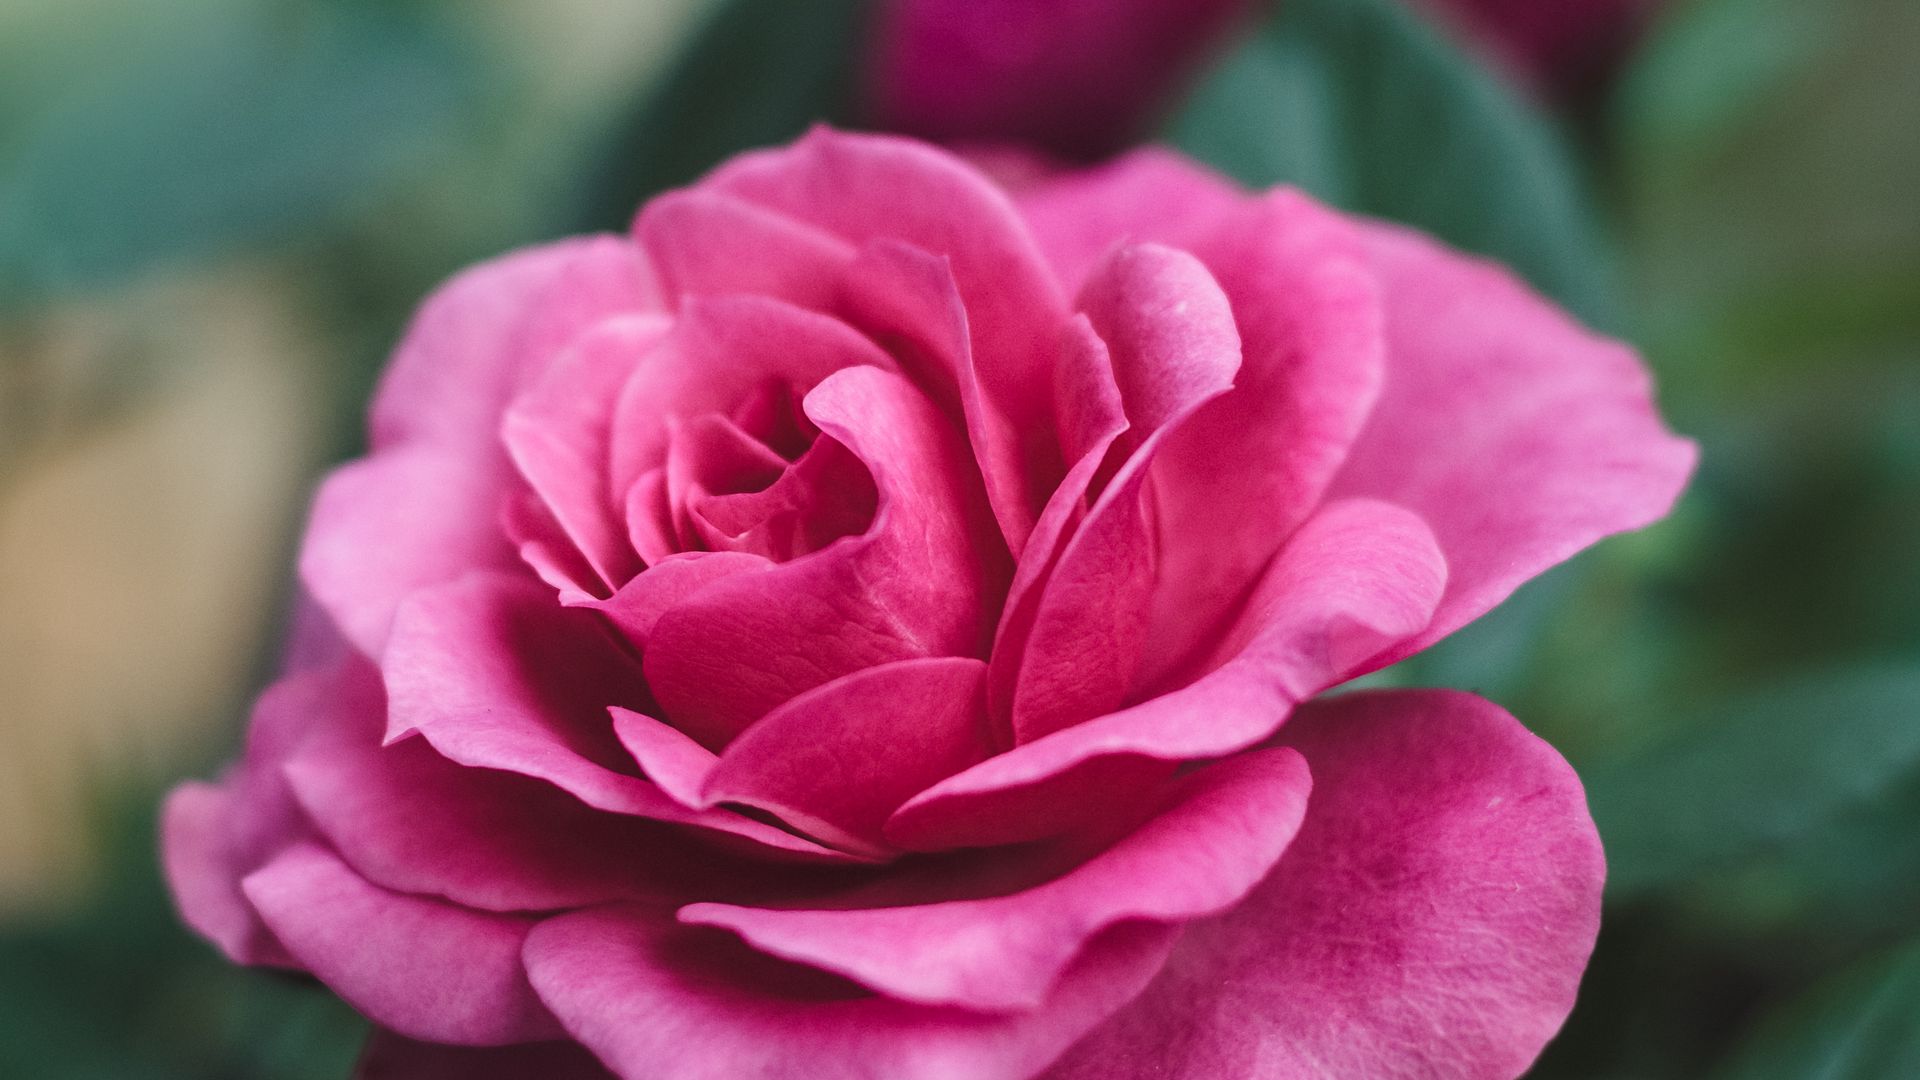 Download wallpaper 1920x1080 rose, flower, closeup, romantic, pink,  beautiful full hd, hdtv, fhd, 1080p hd background